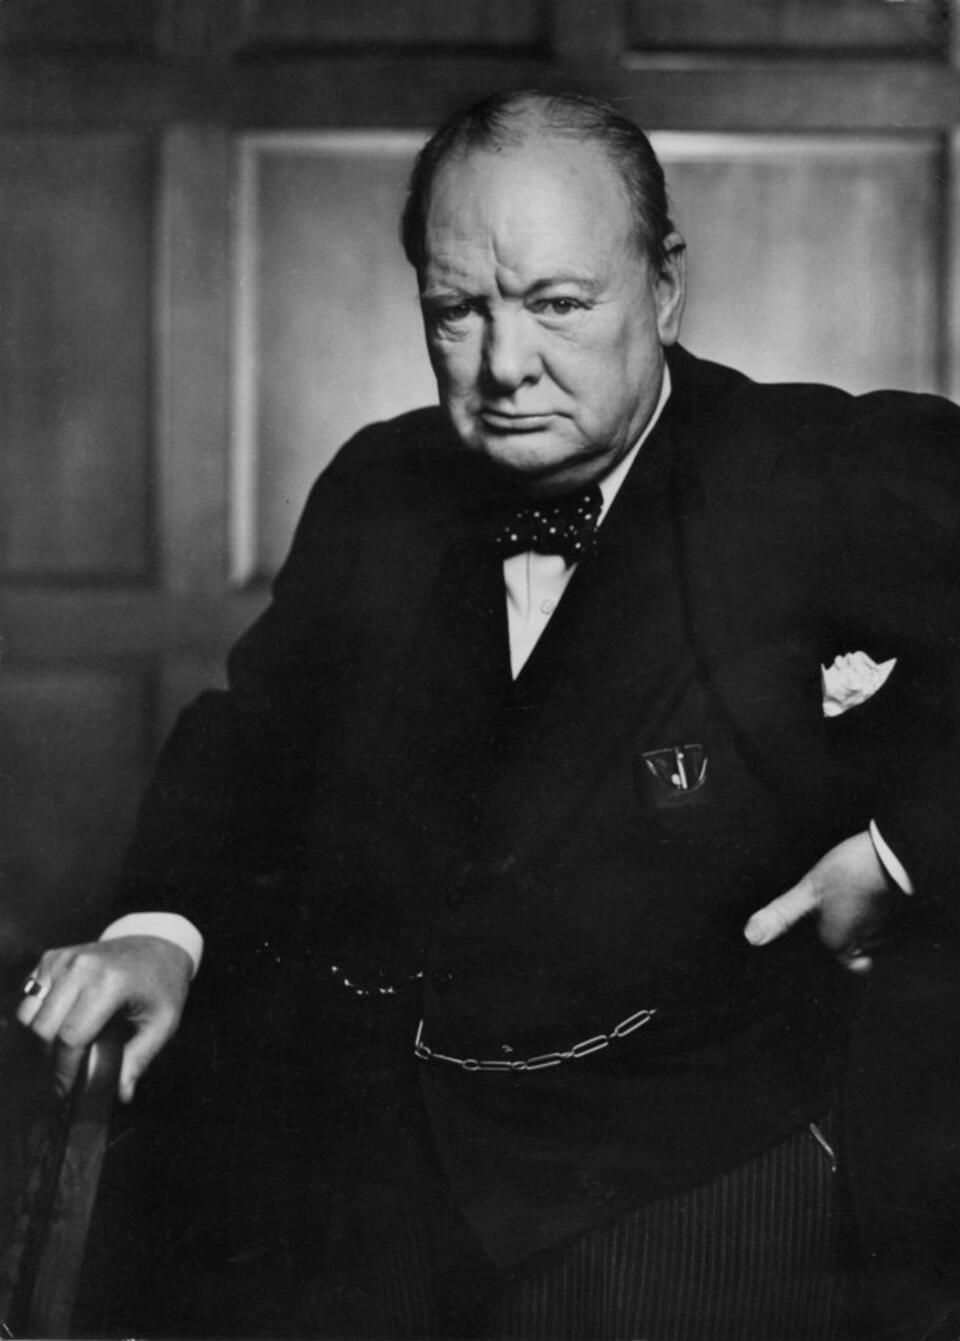 fot. Winston Churchill 1941/ Yousuf Karsh (wikipedia)